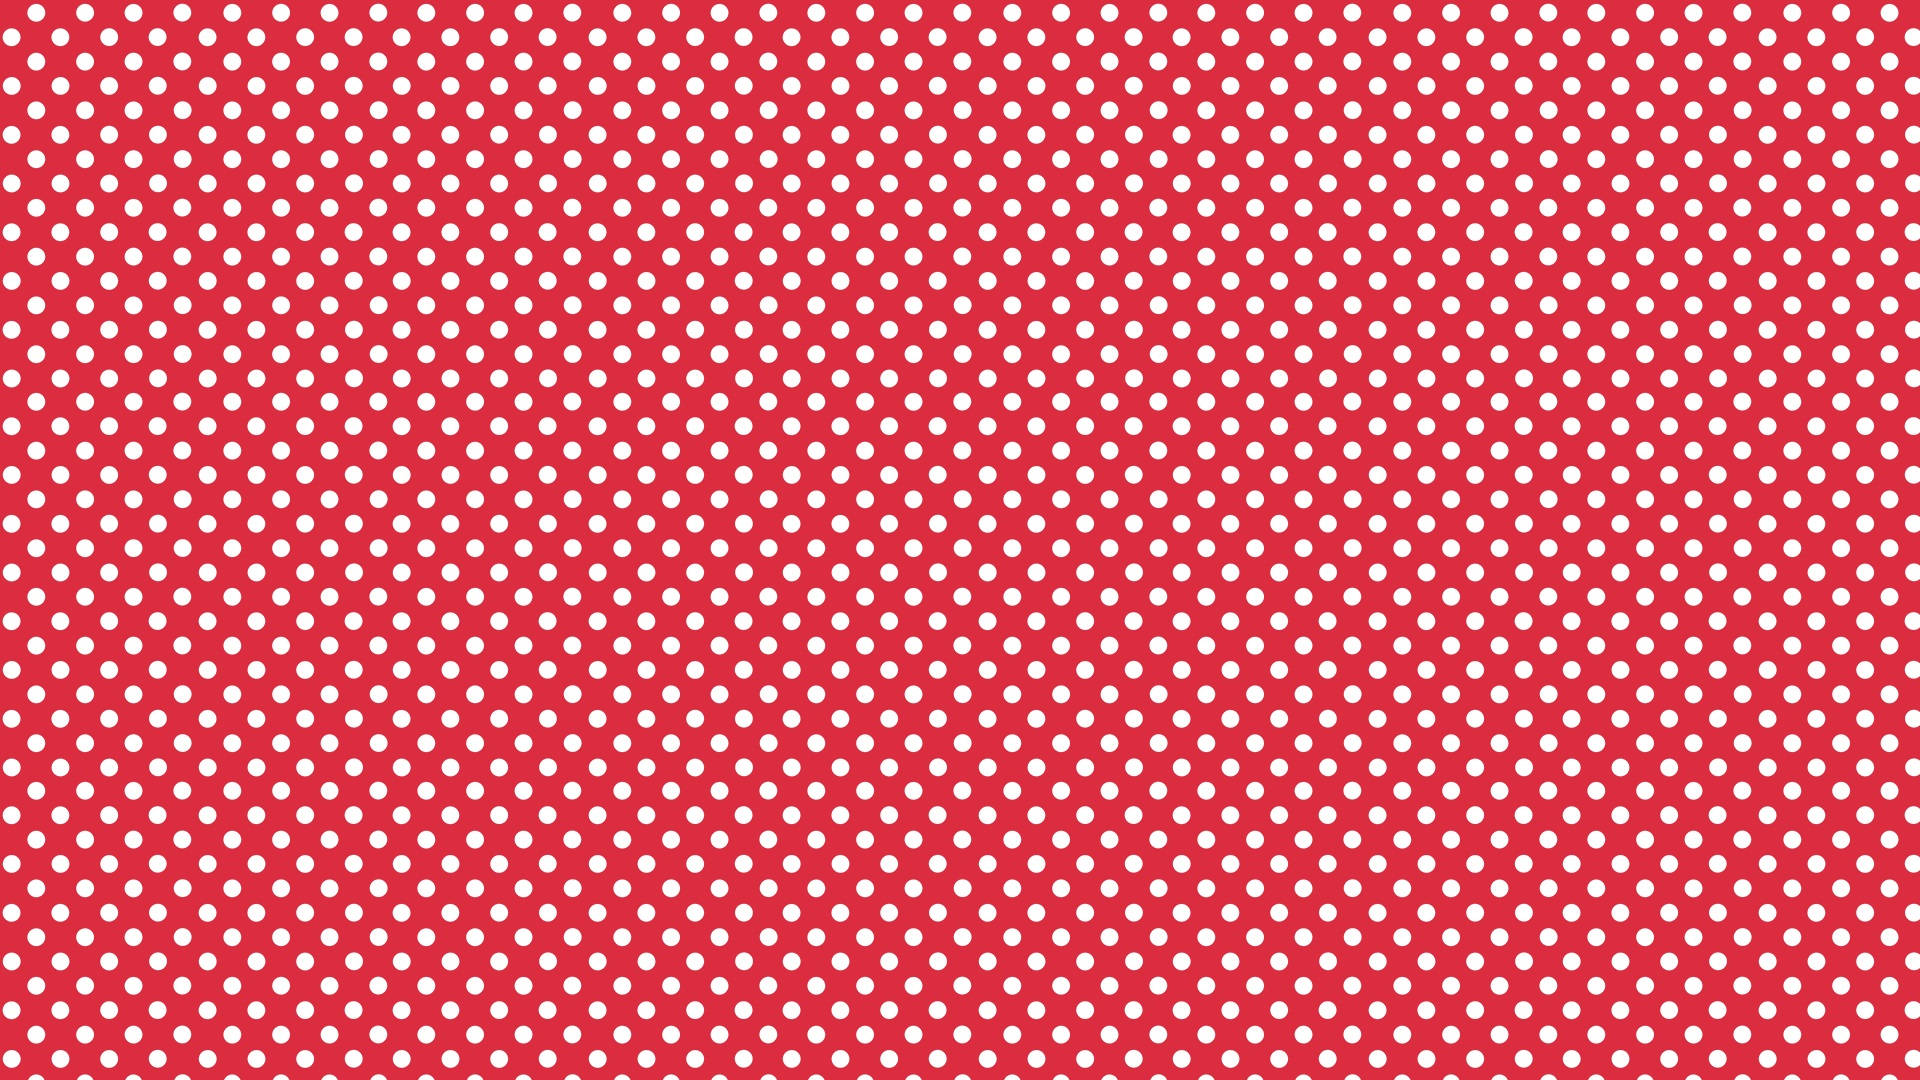 Illusion Polka Prikker Wallpaper